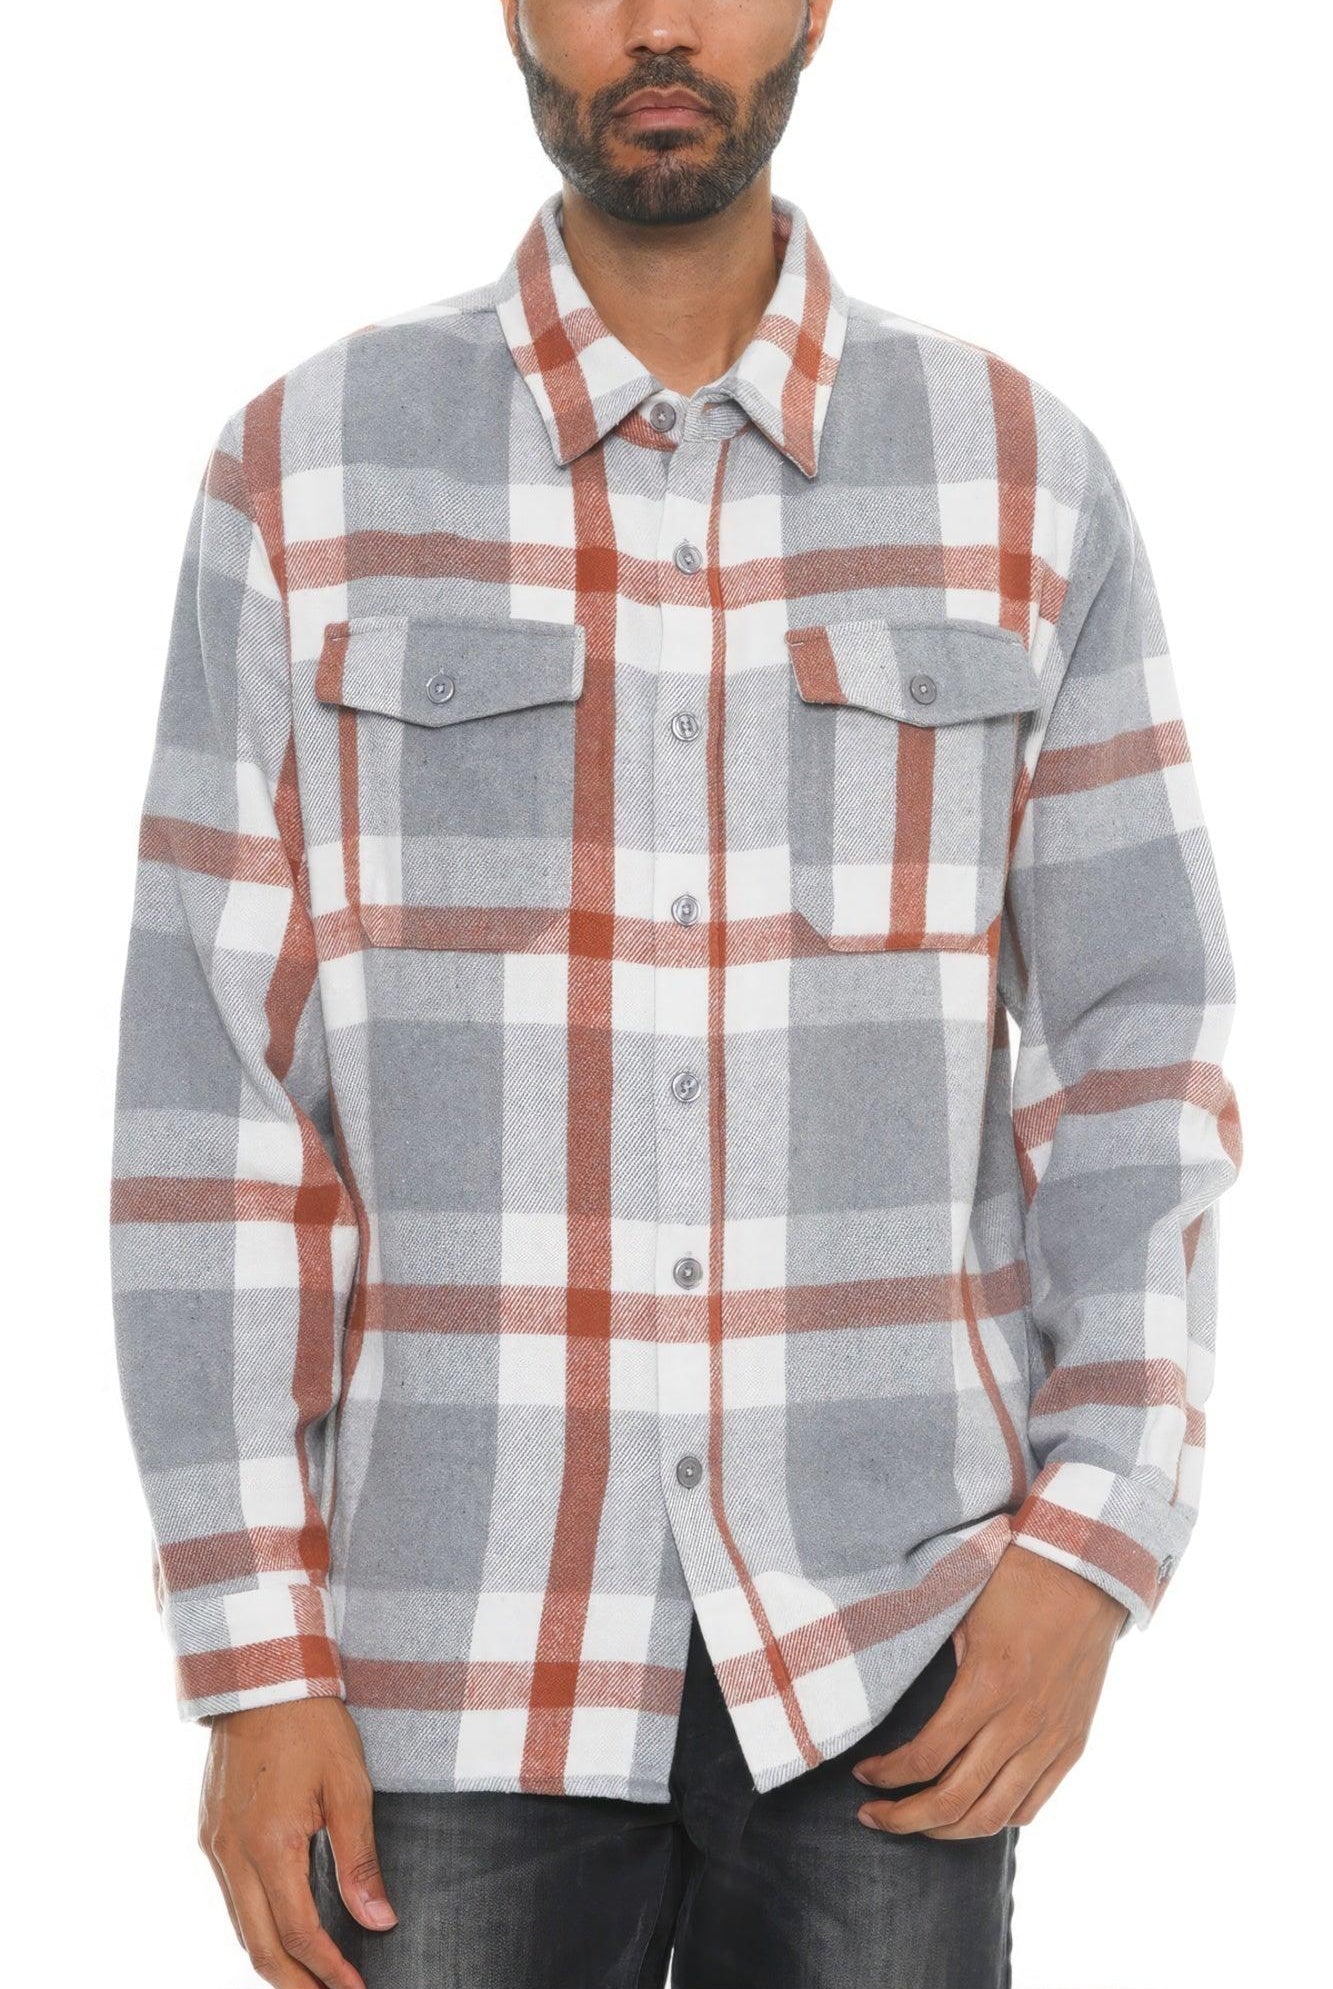 Men's Shirts - Flannels Men's Gray/Rust Checkered Plaid Soft Flannel Shacket